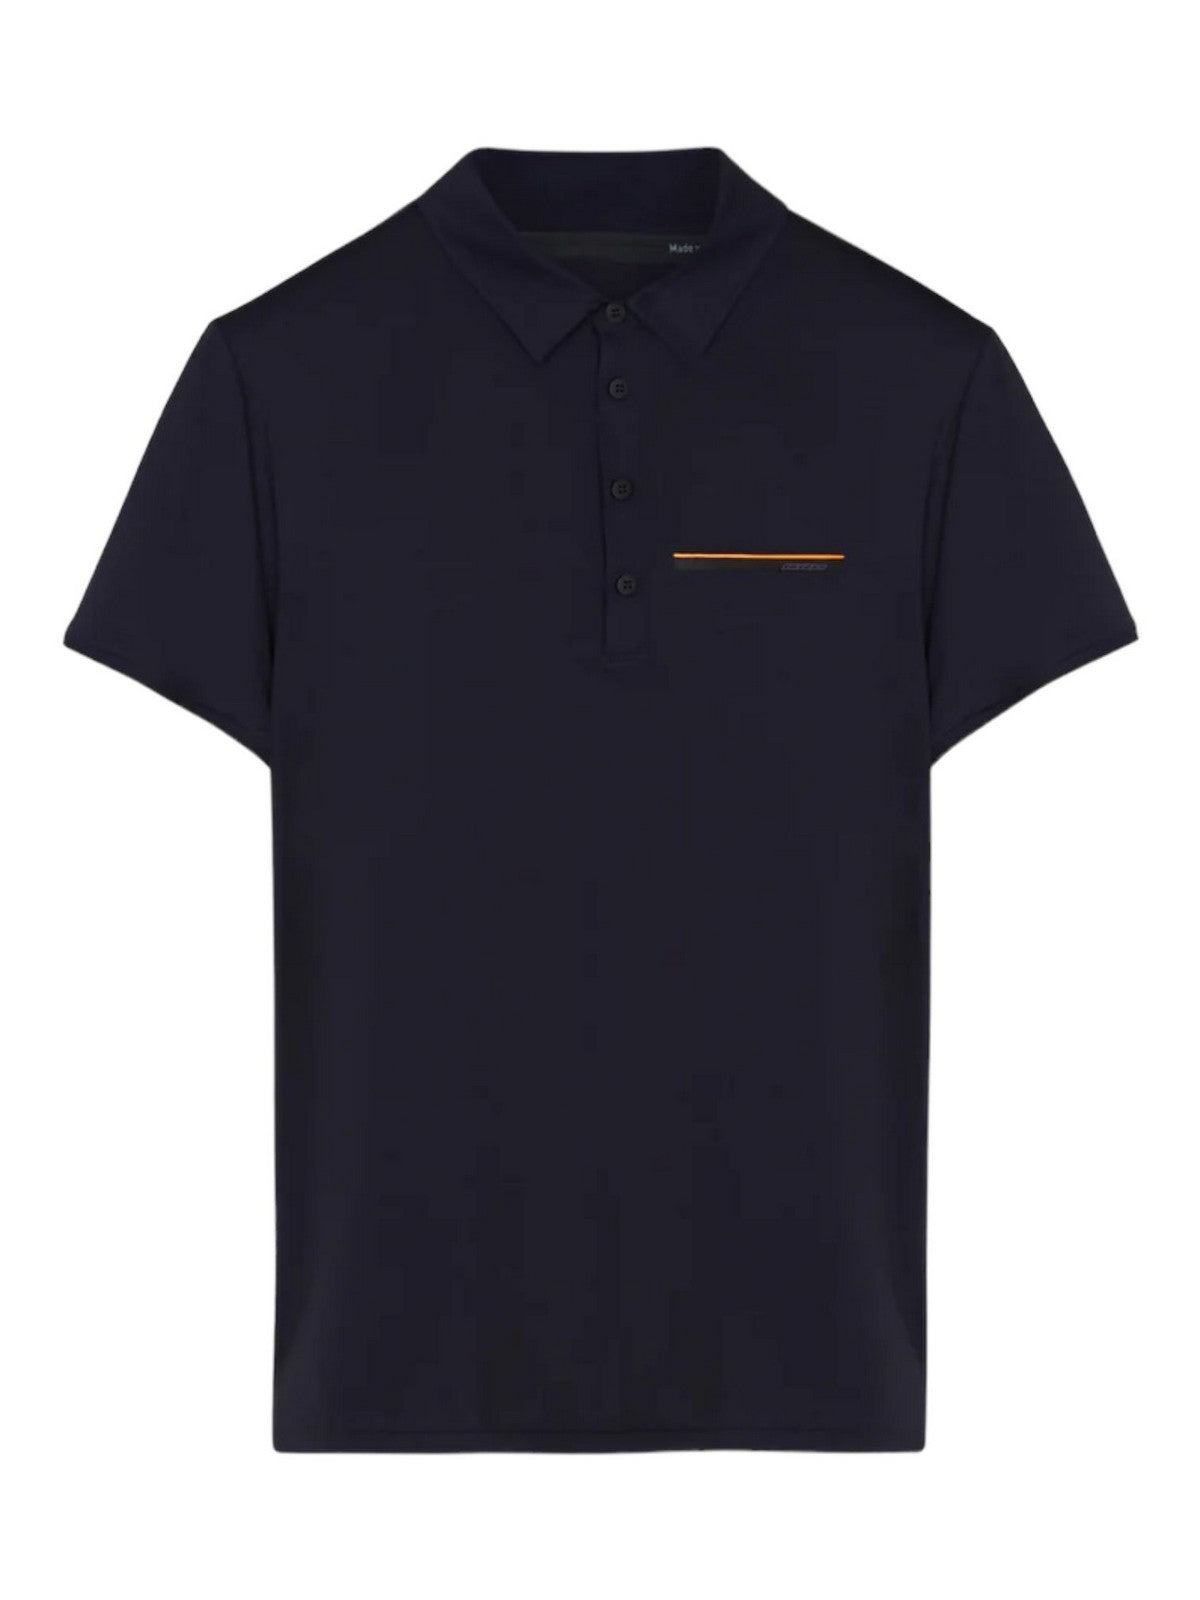 RRD T-Shirt e Polo Uomo  23162 60 Blu